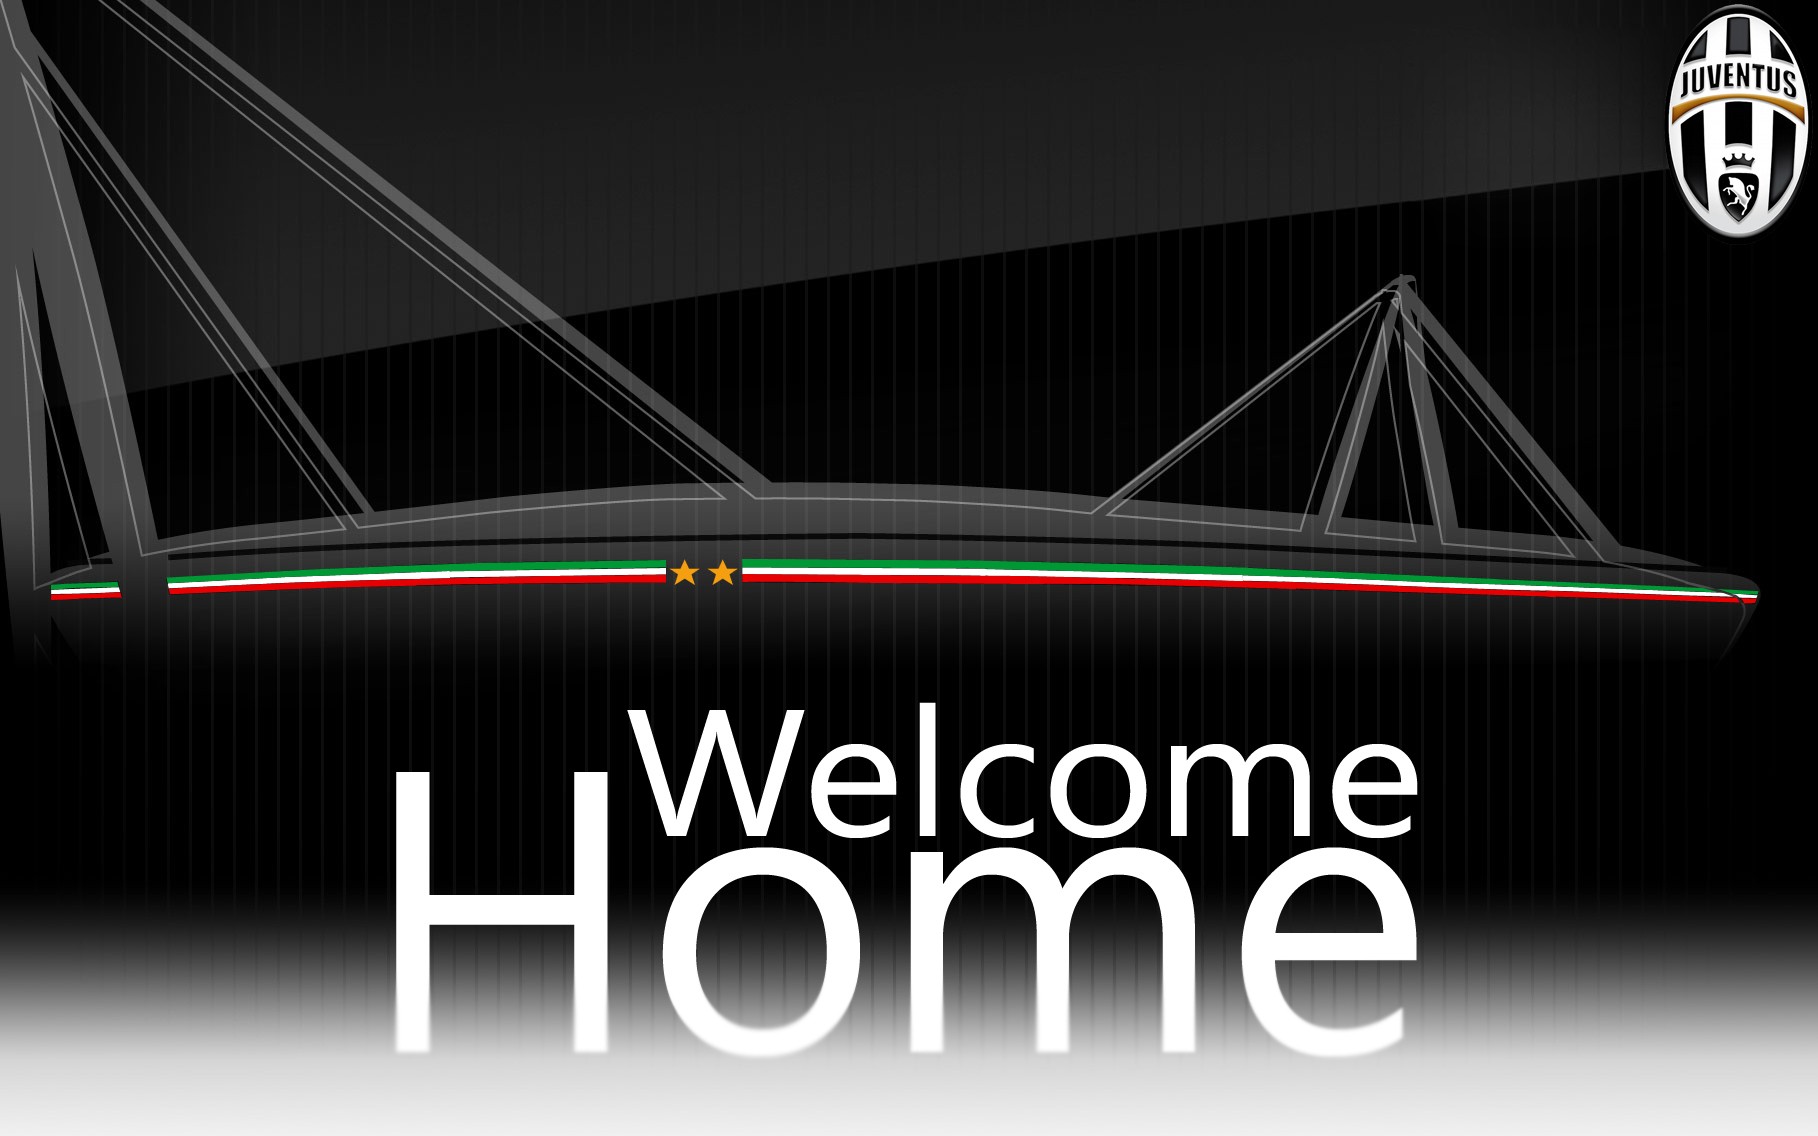 Juve Juventus Stadium Wele Home Best Widescreen